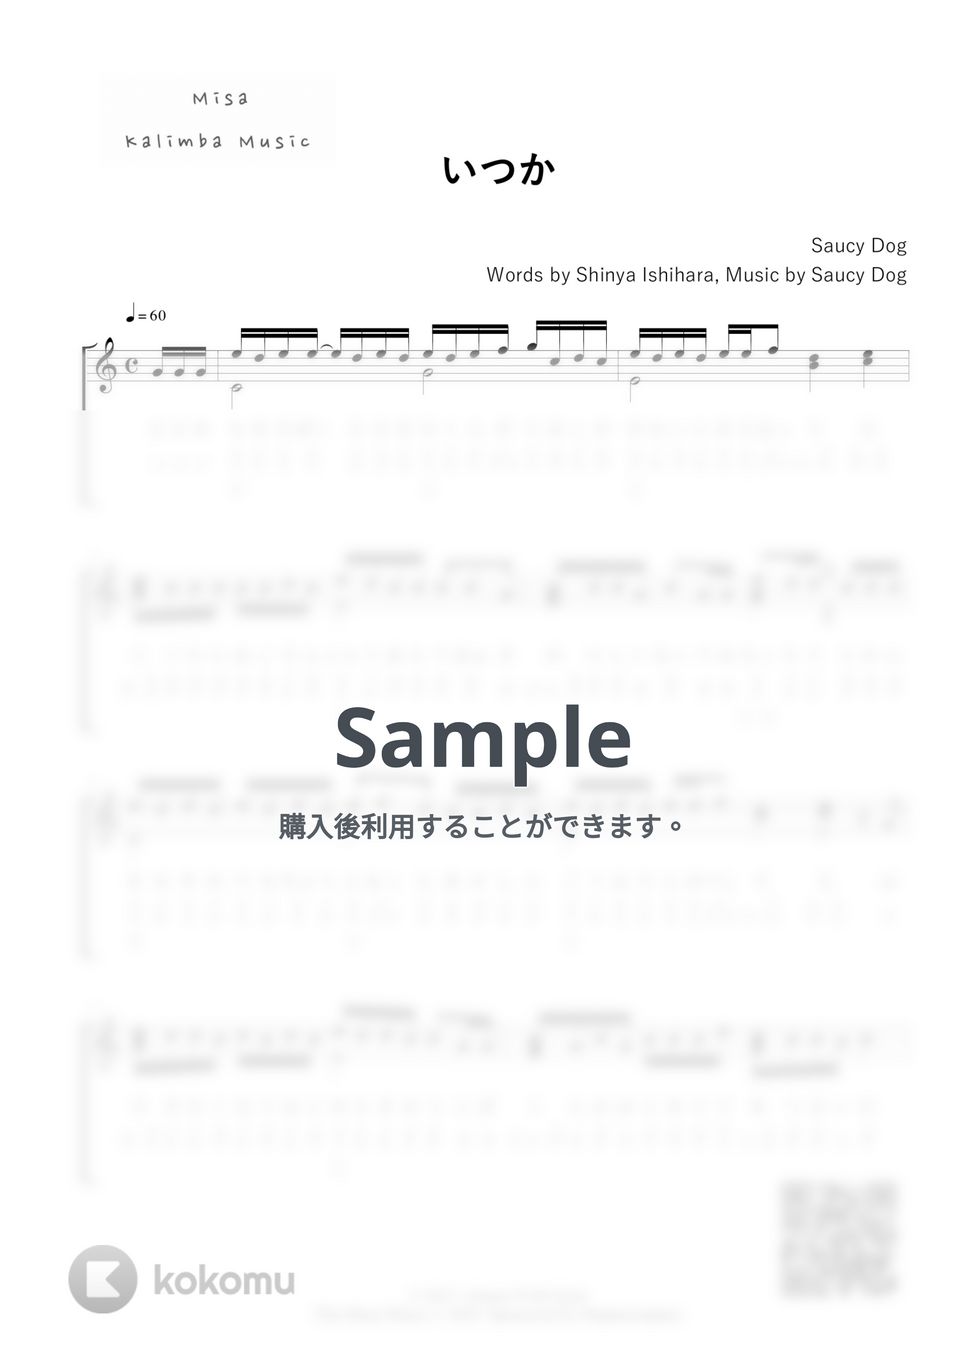 Saucy Dog - いつか / 17音カリンバ / ドレミ音名表記 (歌詞付き/ 模範演奏付き) by Misa / Kalimba Music